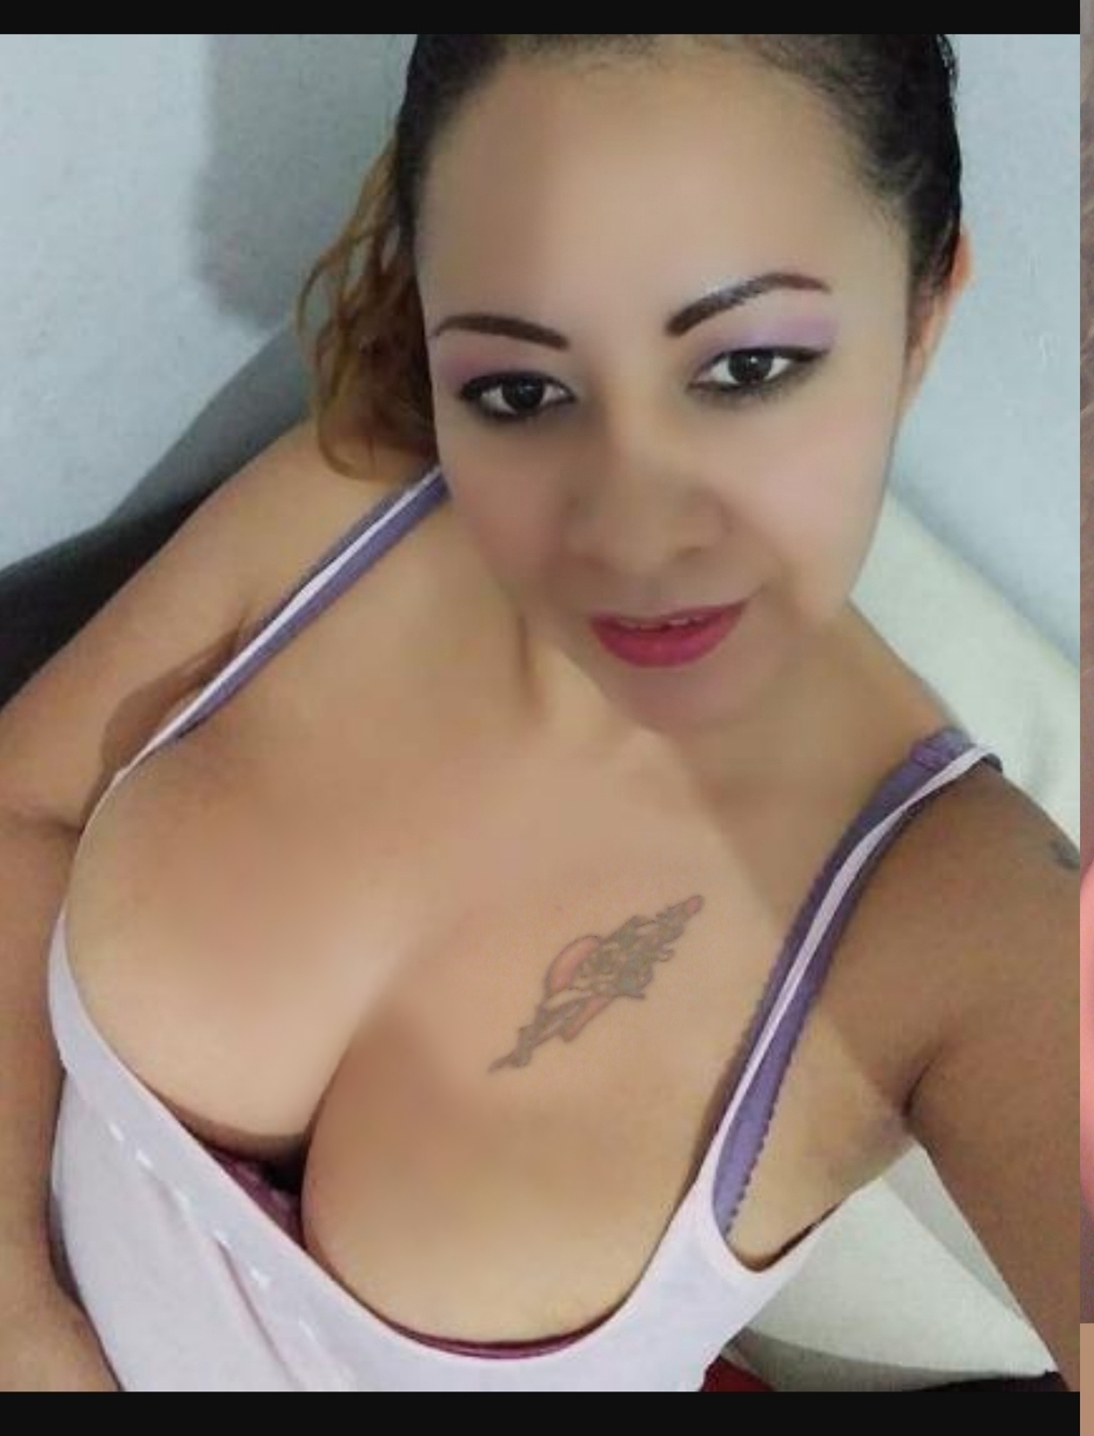 Mexican Huge Tits Cleavage - Latina milf nice cleavage big tits Foto Porno - EPORNER